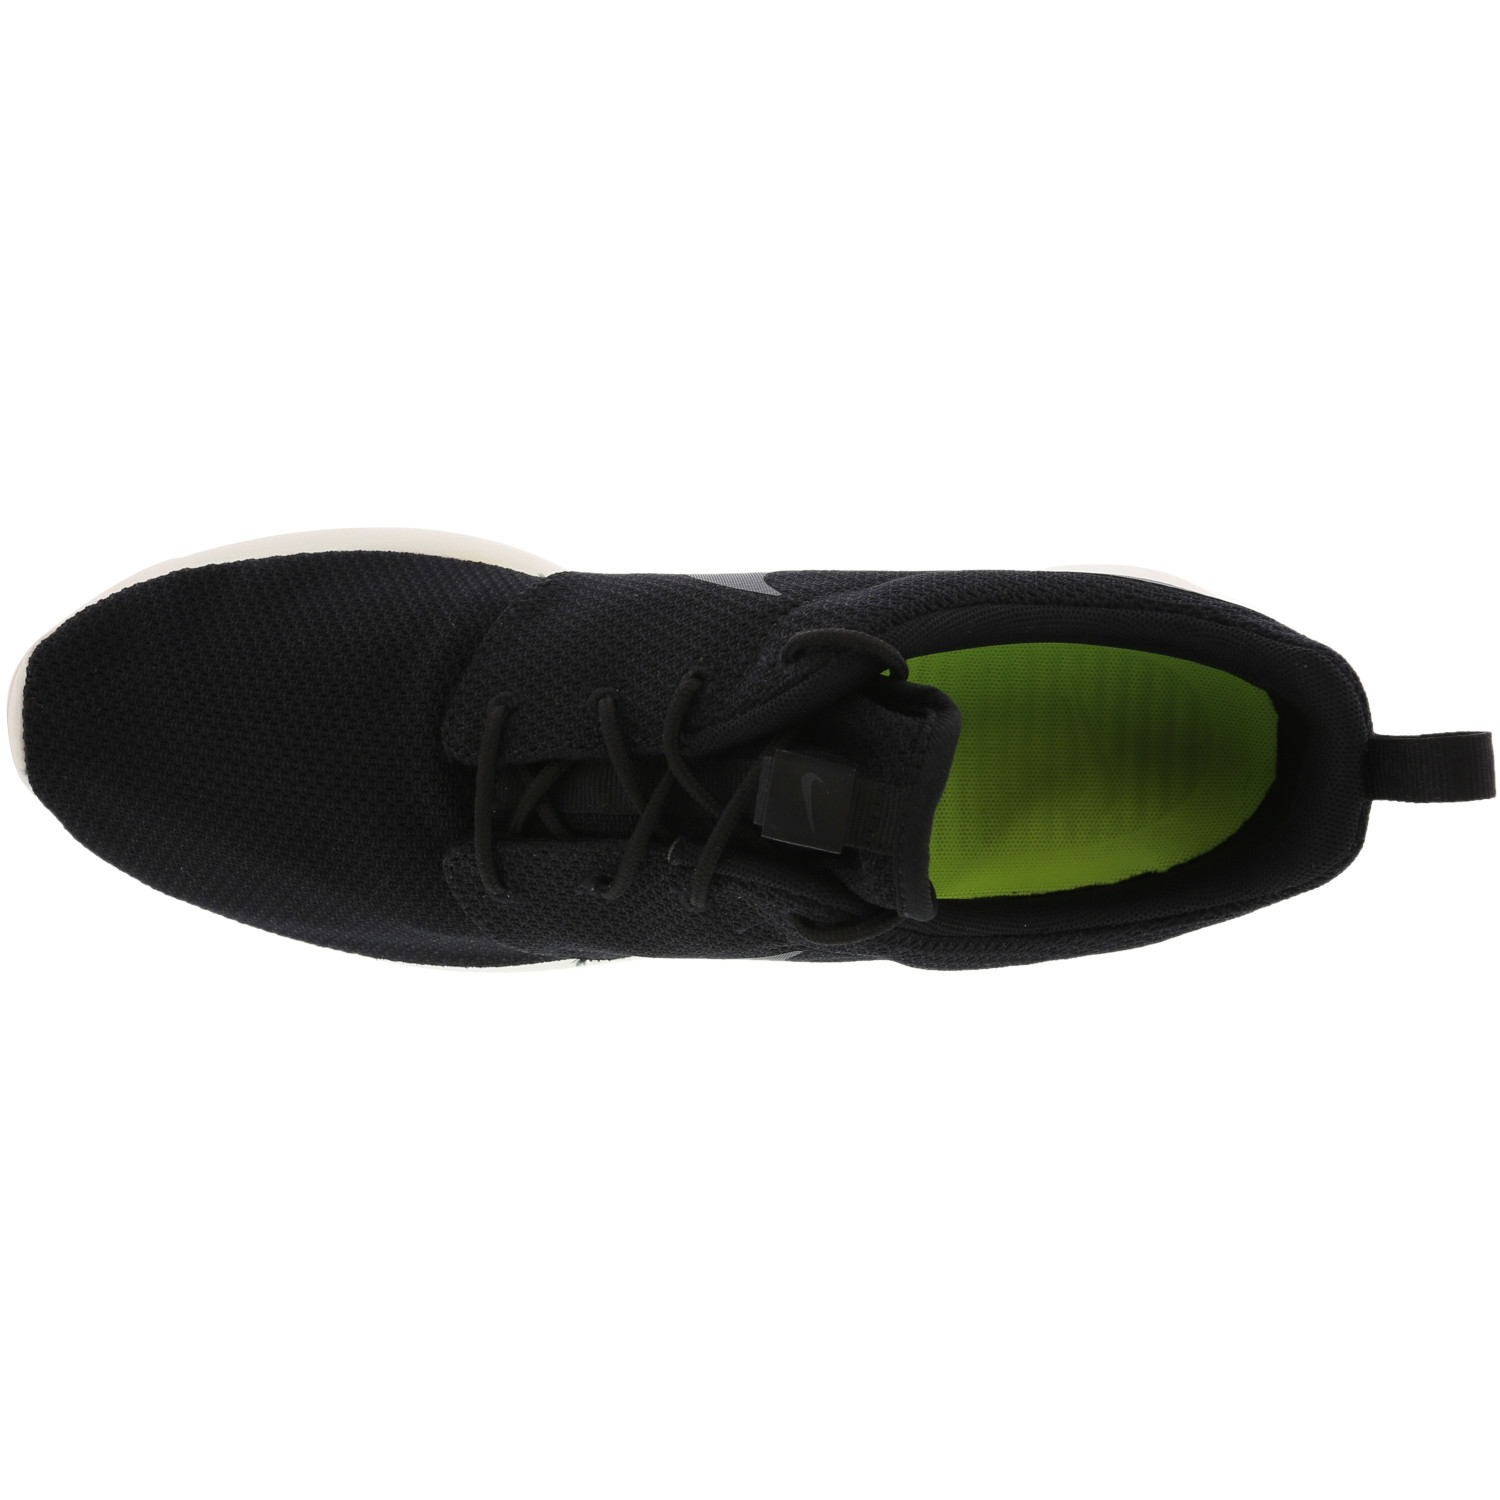 Nike Men's Roshe One Black / Anthracite-Sail Ankle-High Running - 10M - image 4 of 5